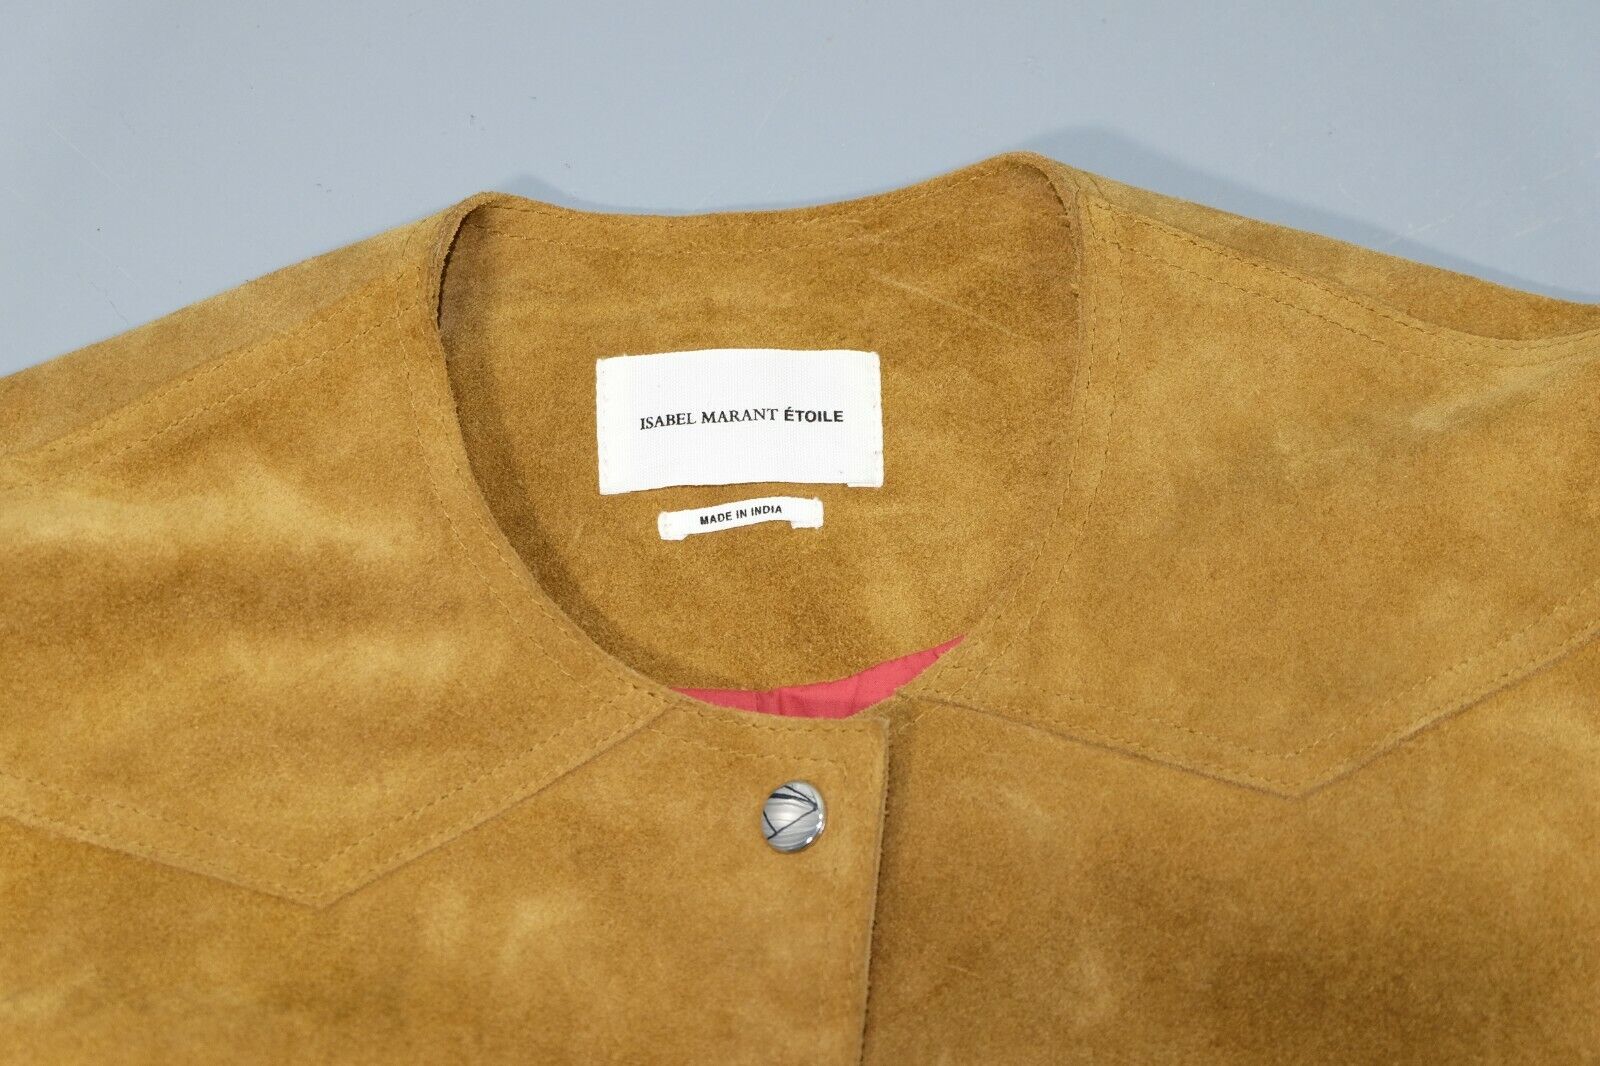 ISABEL MARANT ETOILE beige suede ADLER Coat Jacket 34 | eBay